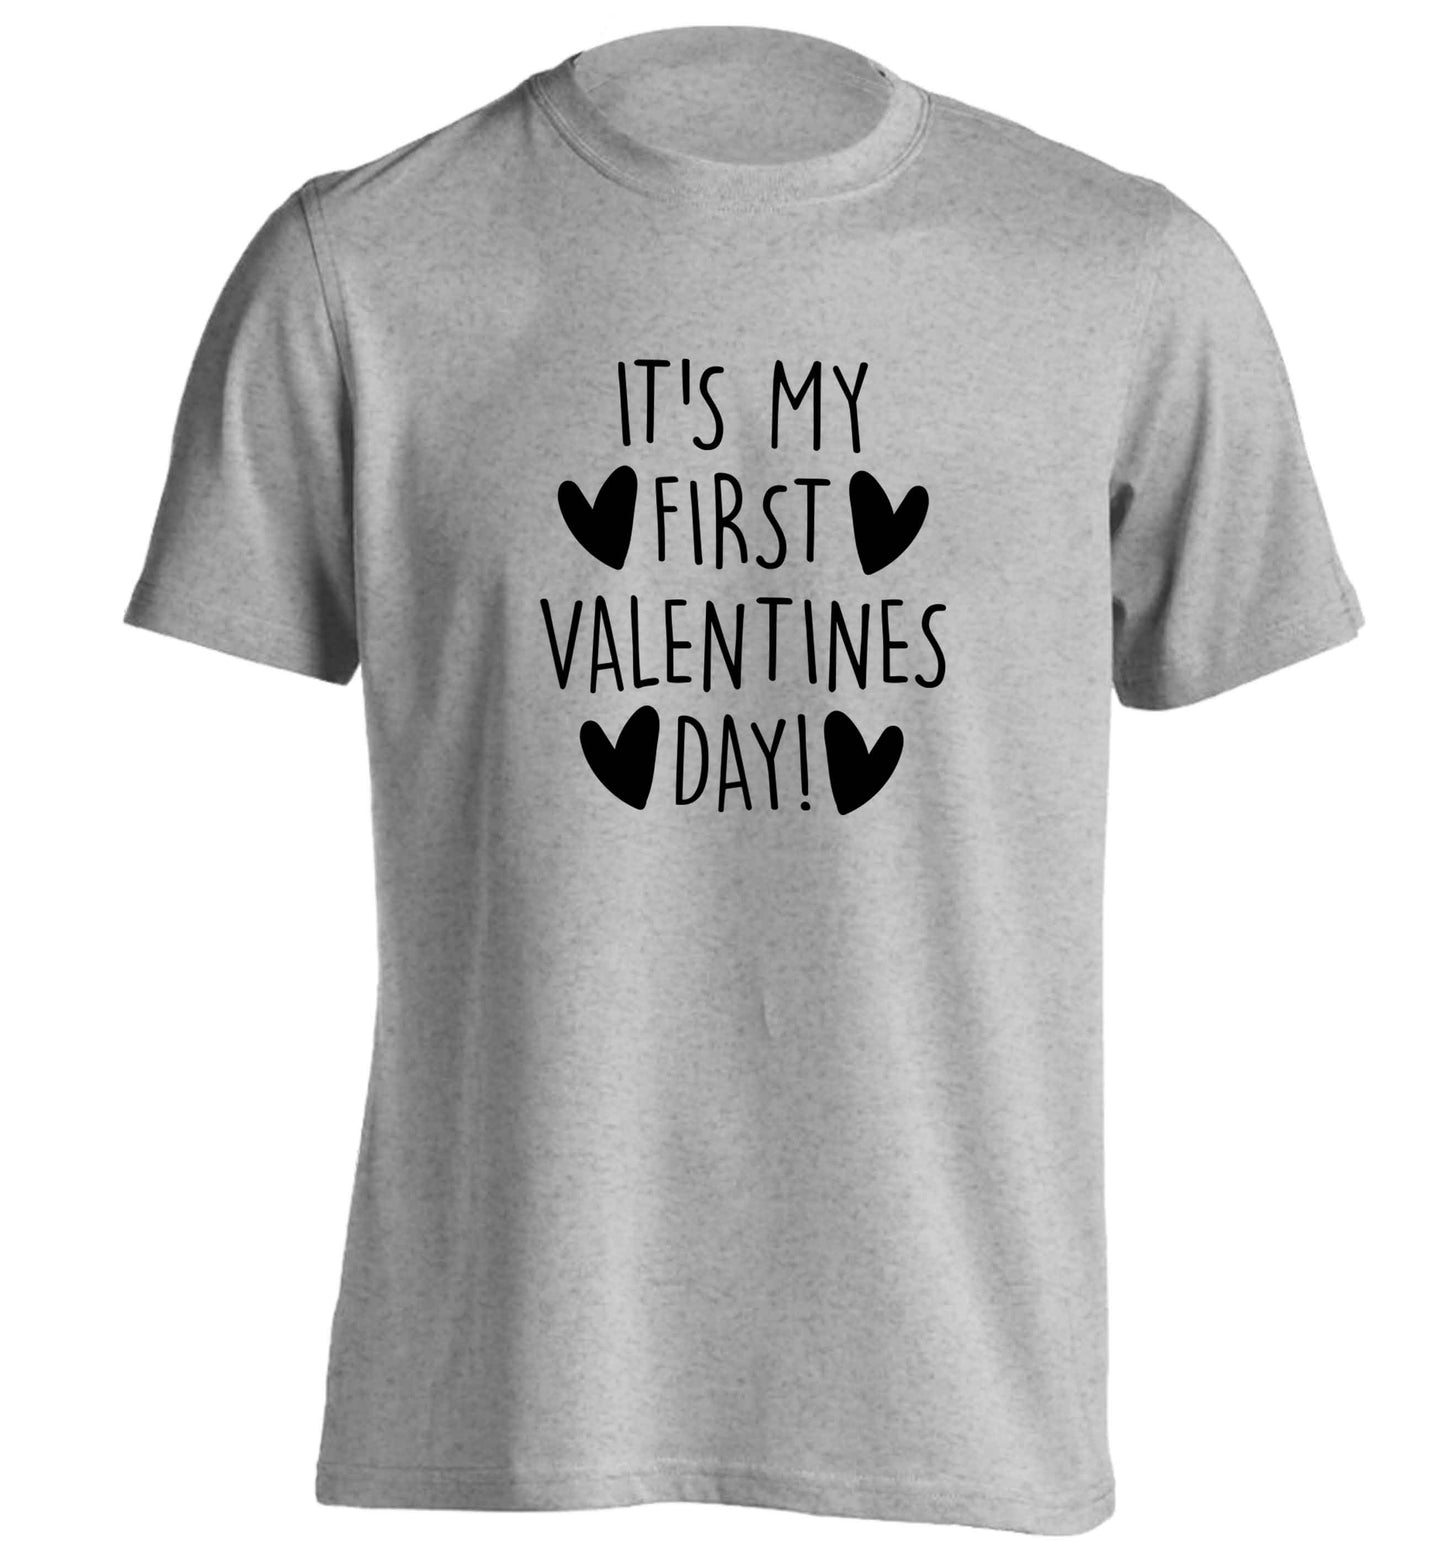 It's my first valentines day! adults unisex grey Tshirt 2XL